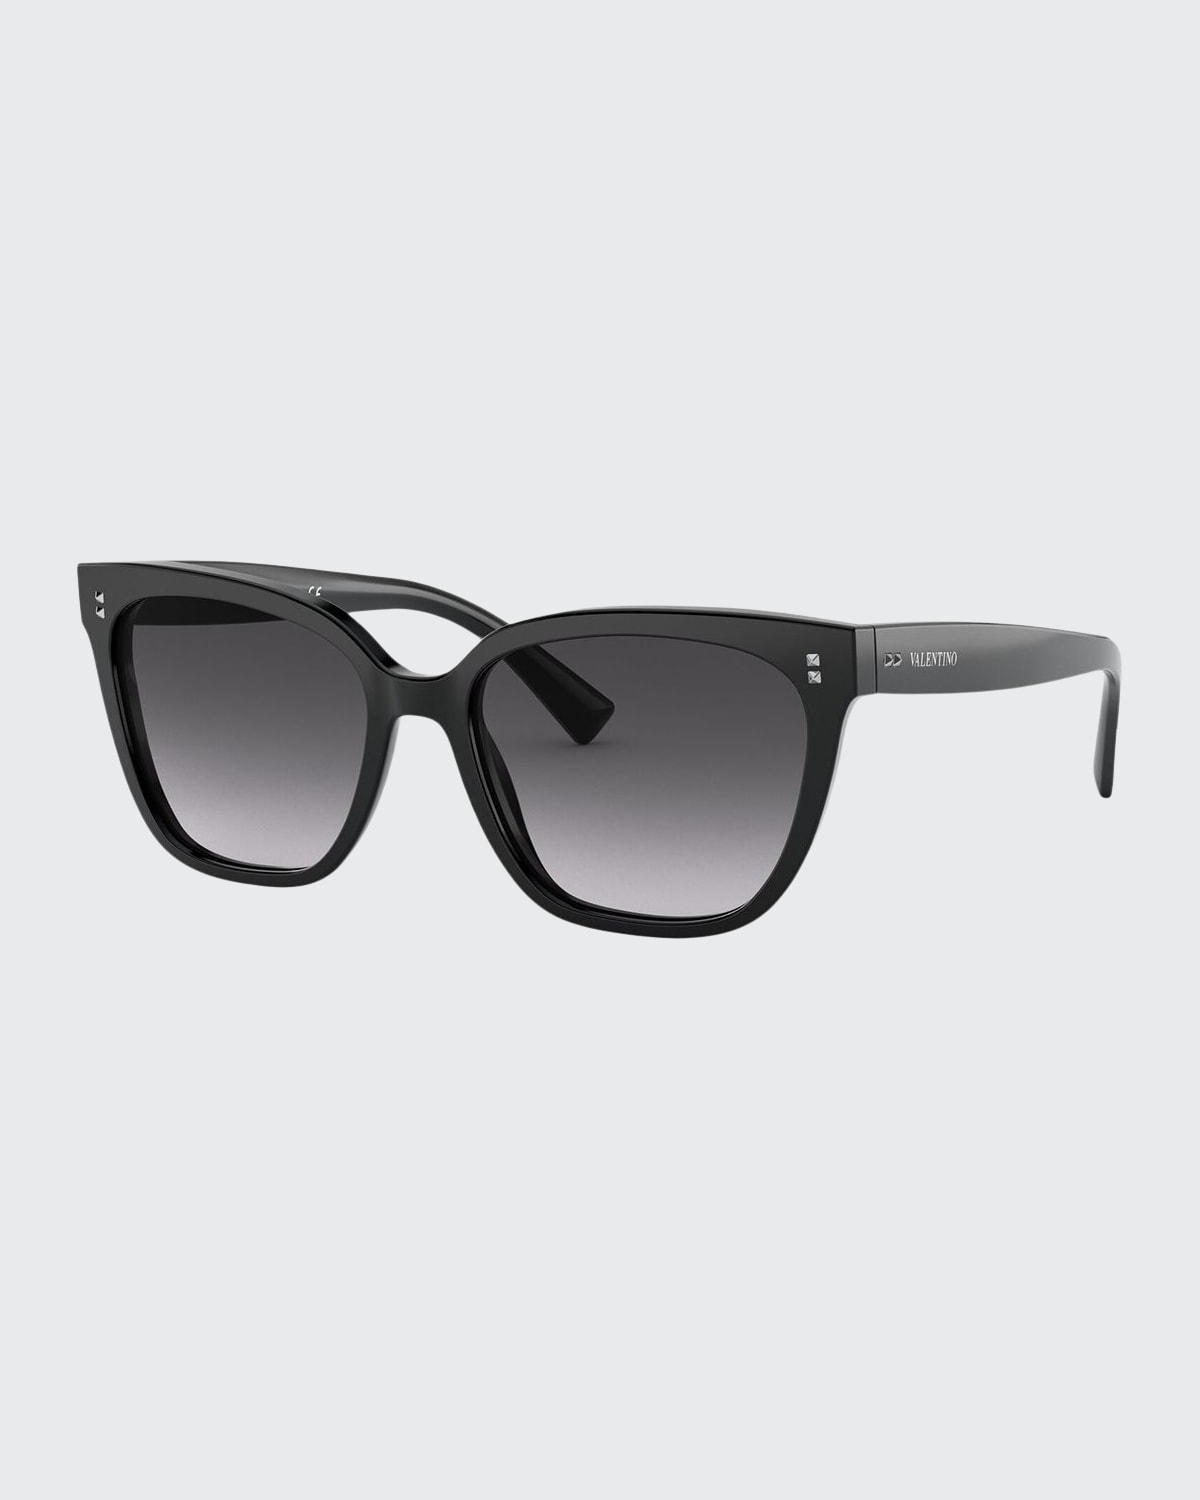 VALENTINO Sunglasses for Women | ModeSens